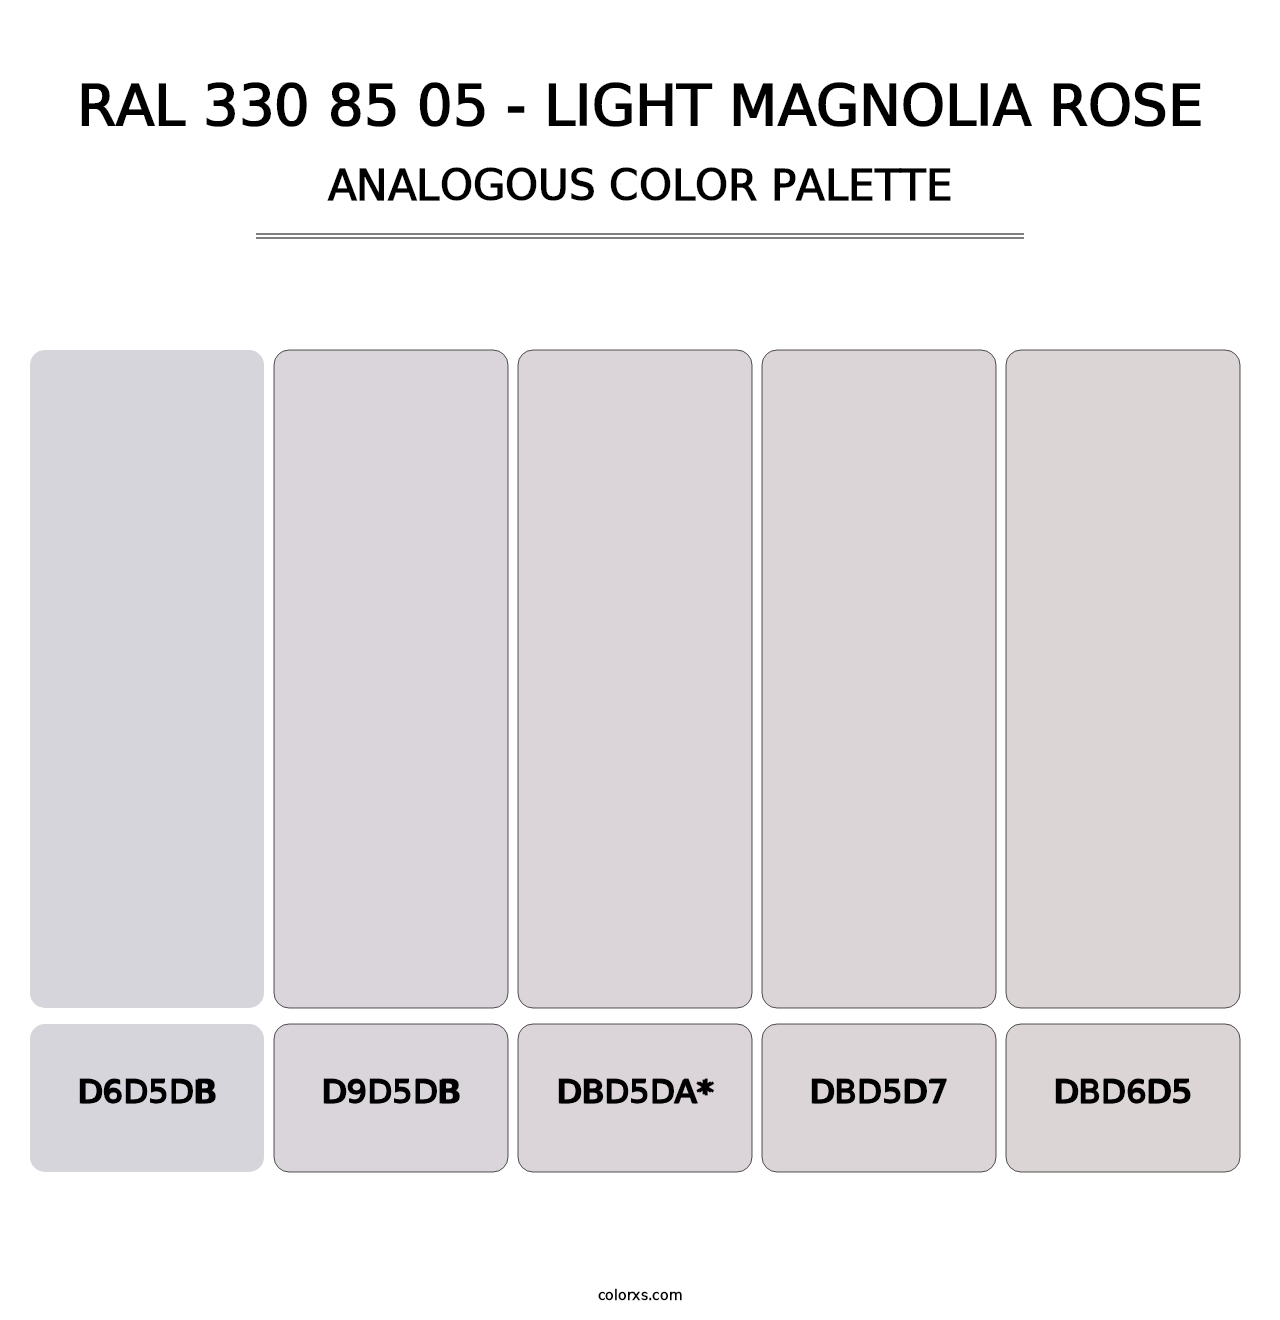 RAL 330 85 05 - Light Magnolia Rose - Analogous Color Palette